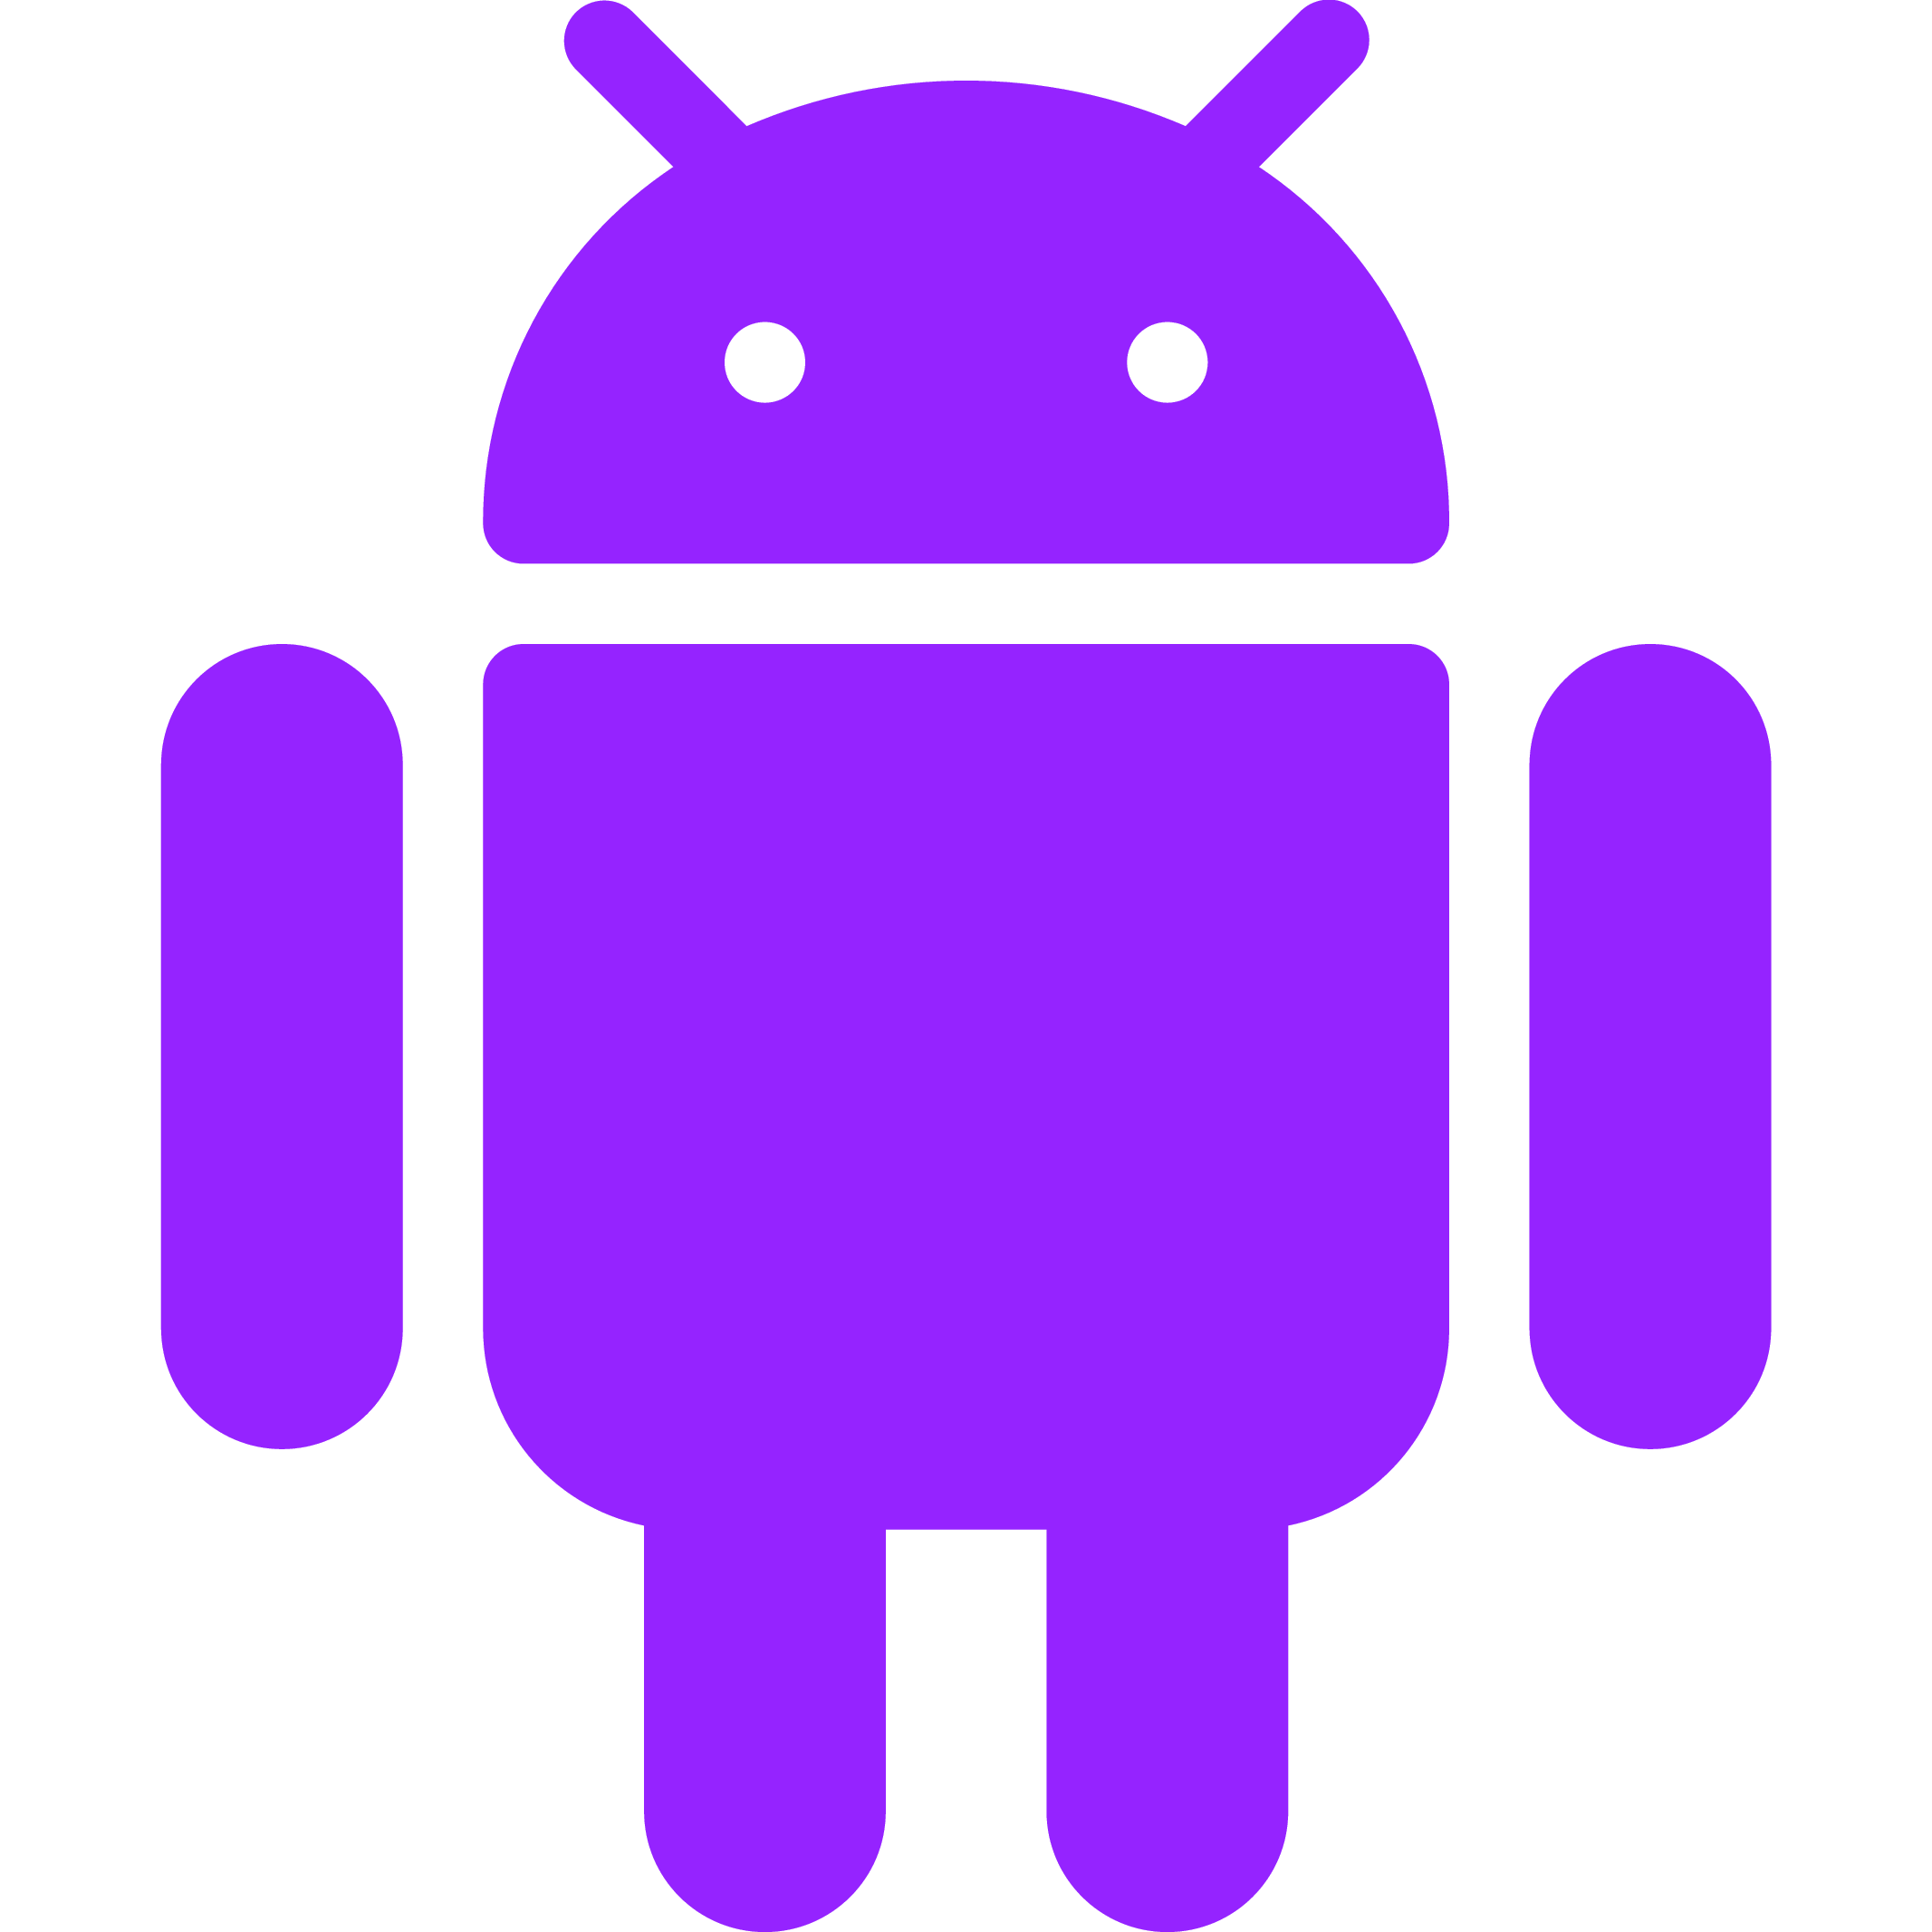 Evon Mobile: Cross-Platform Support, Including Android